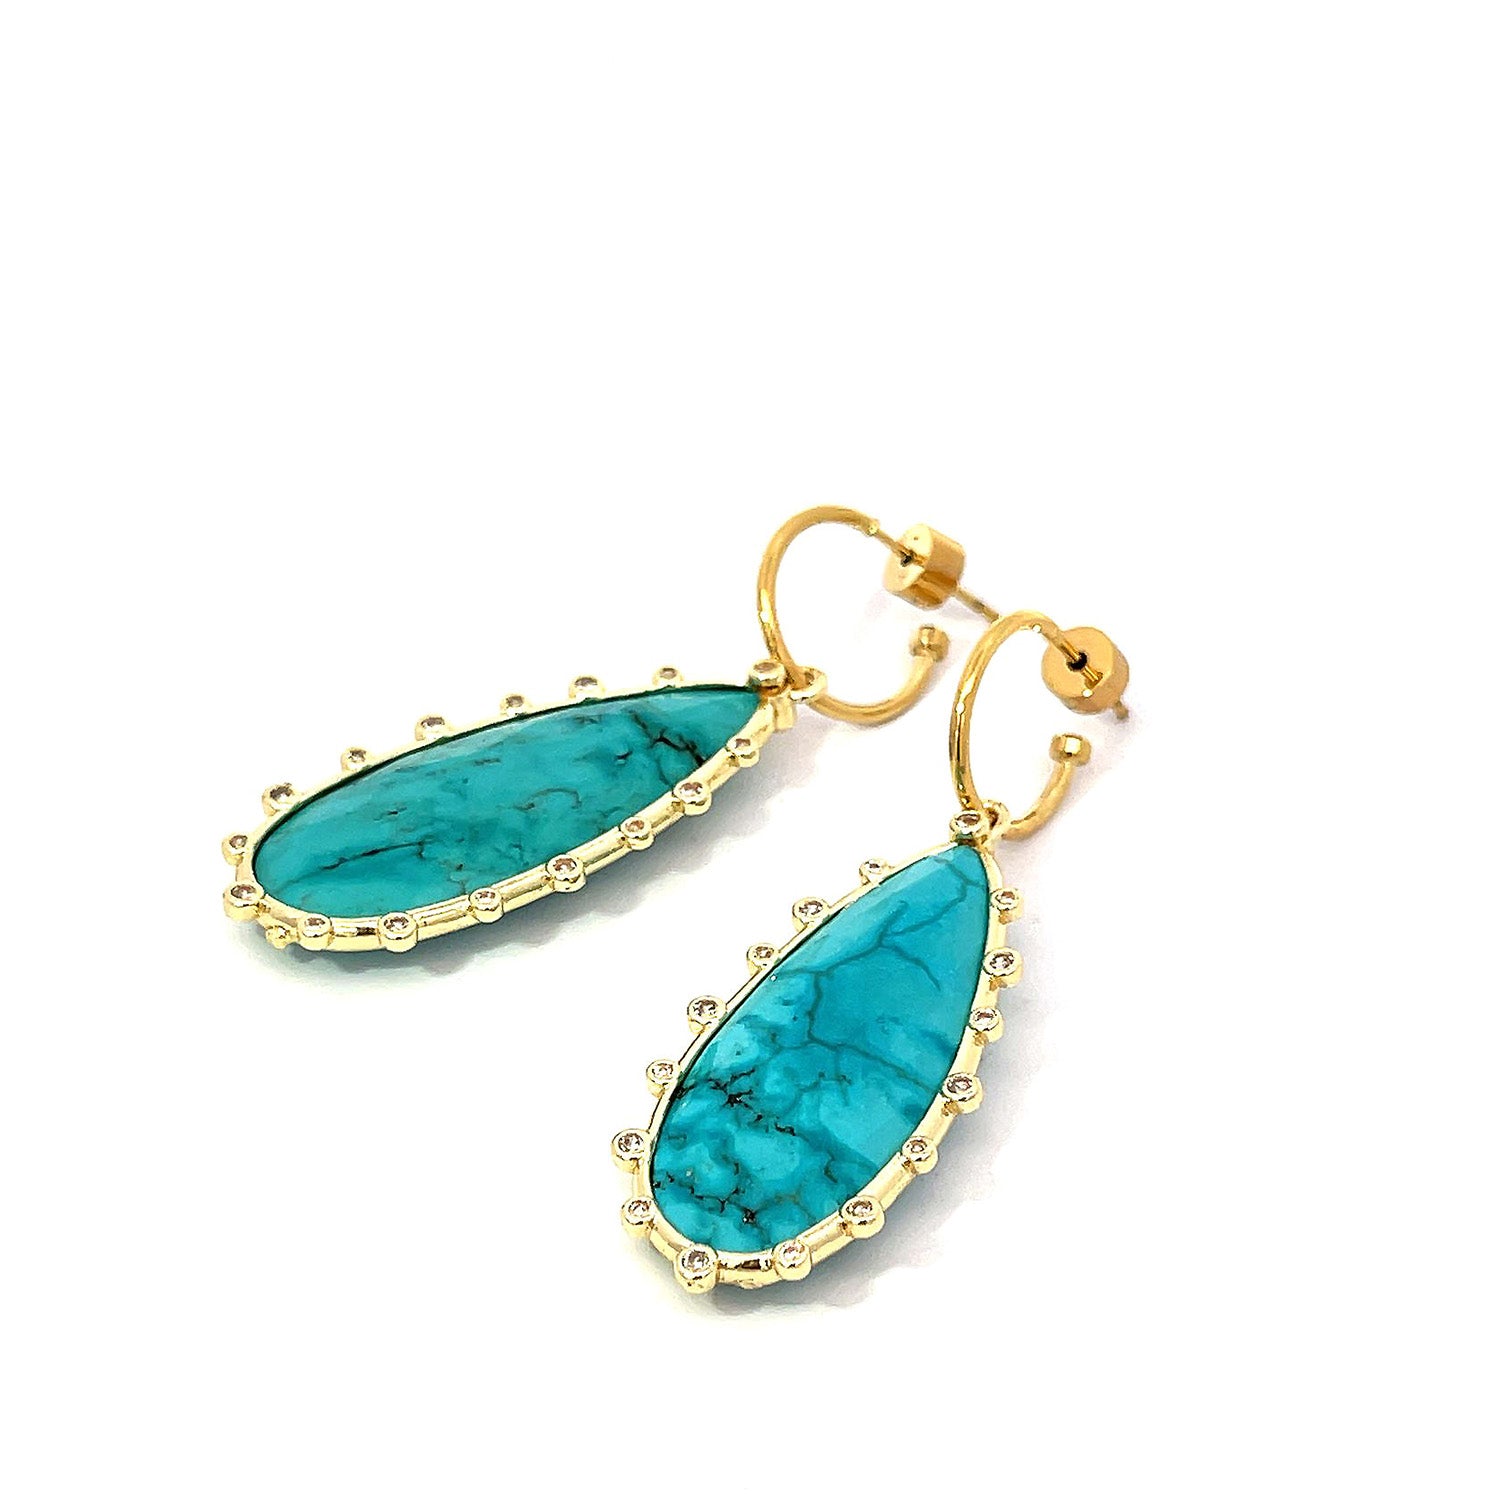 Buy Turquoise Drop Earrings by Gosia Orlowska